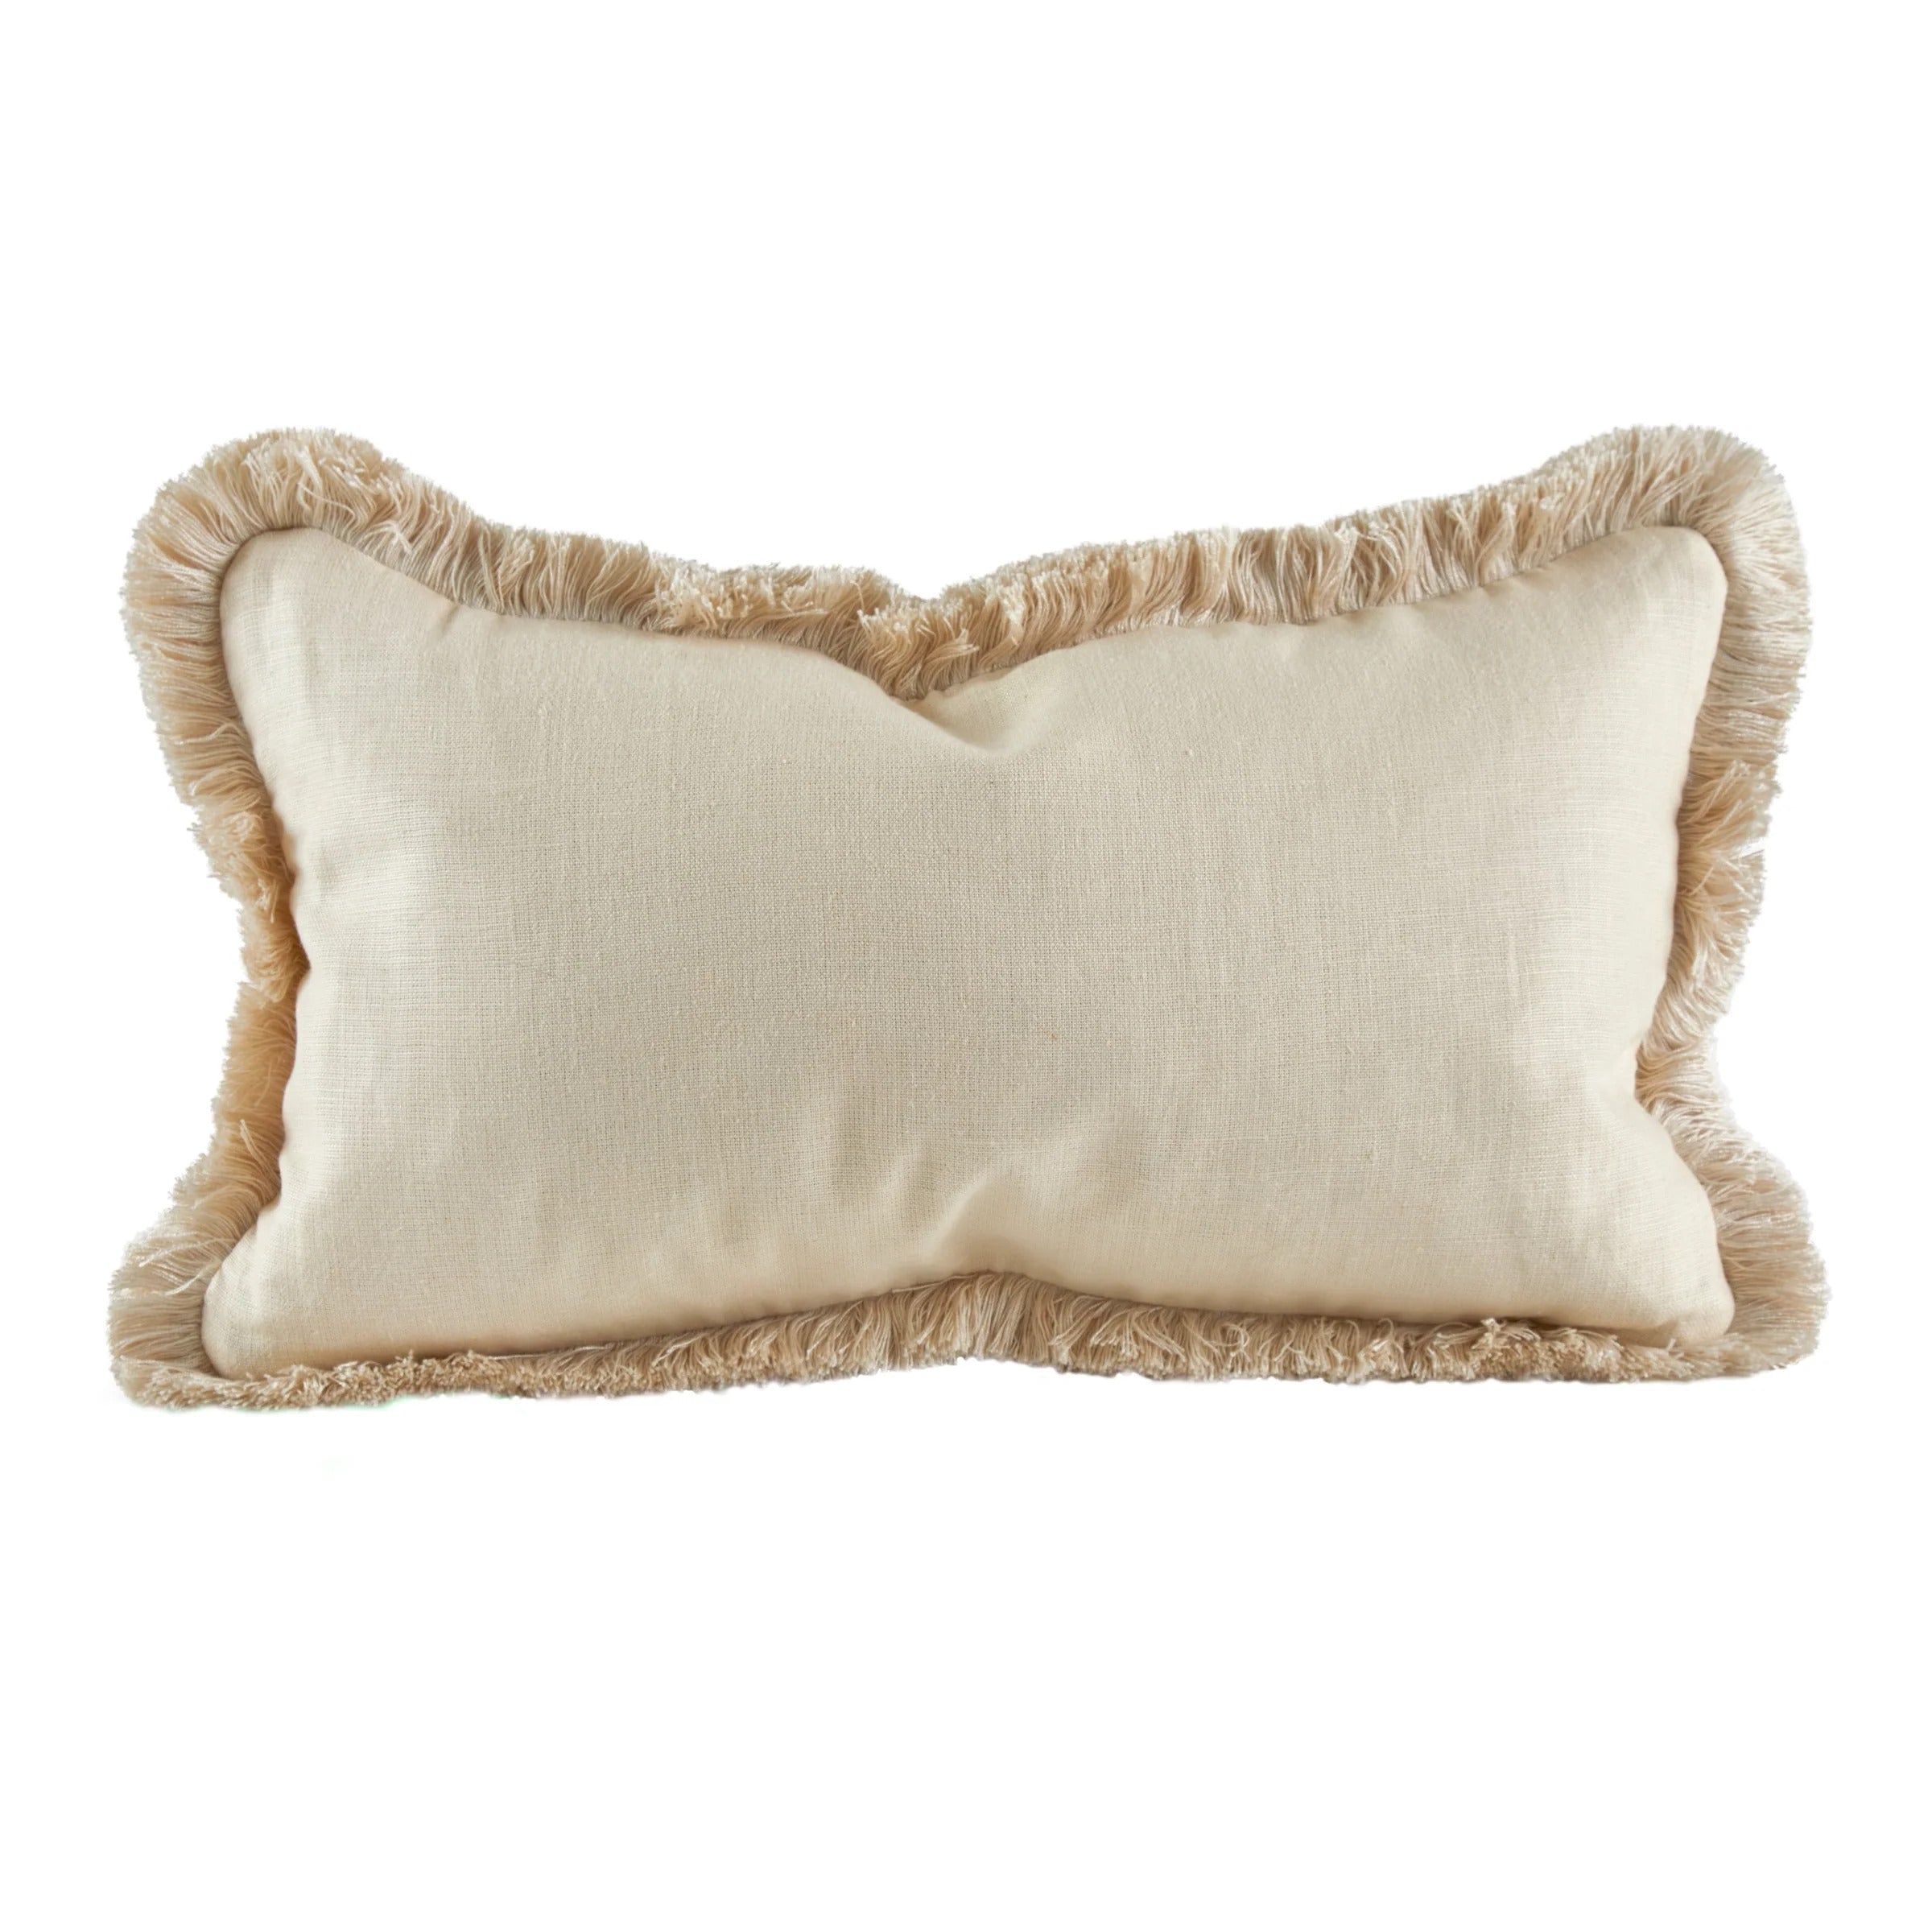 Dahlias Parchment Cushion with a Brush Fringe